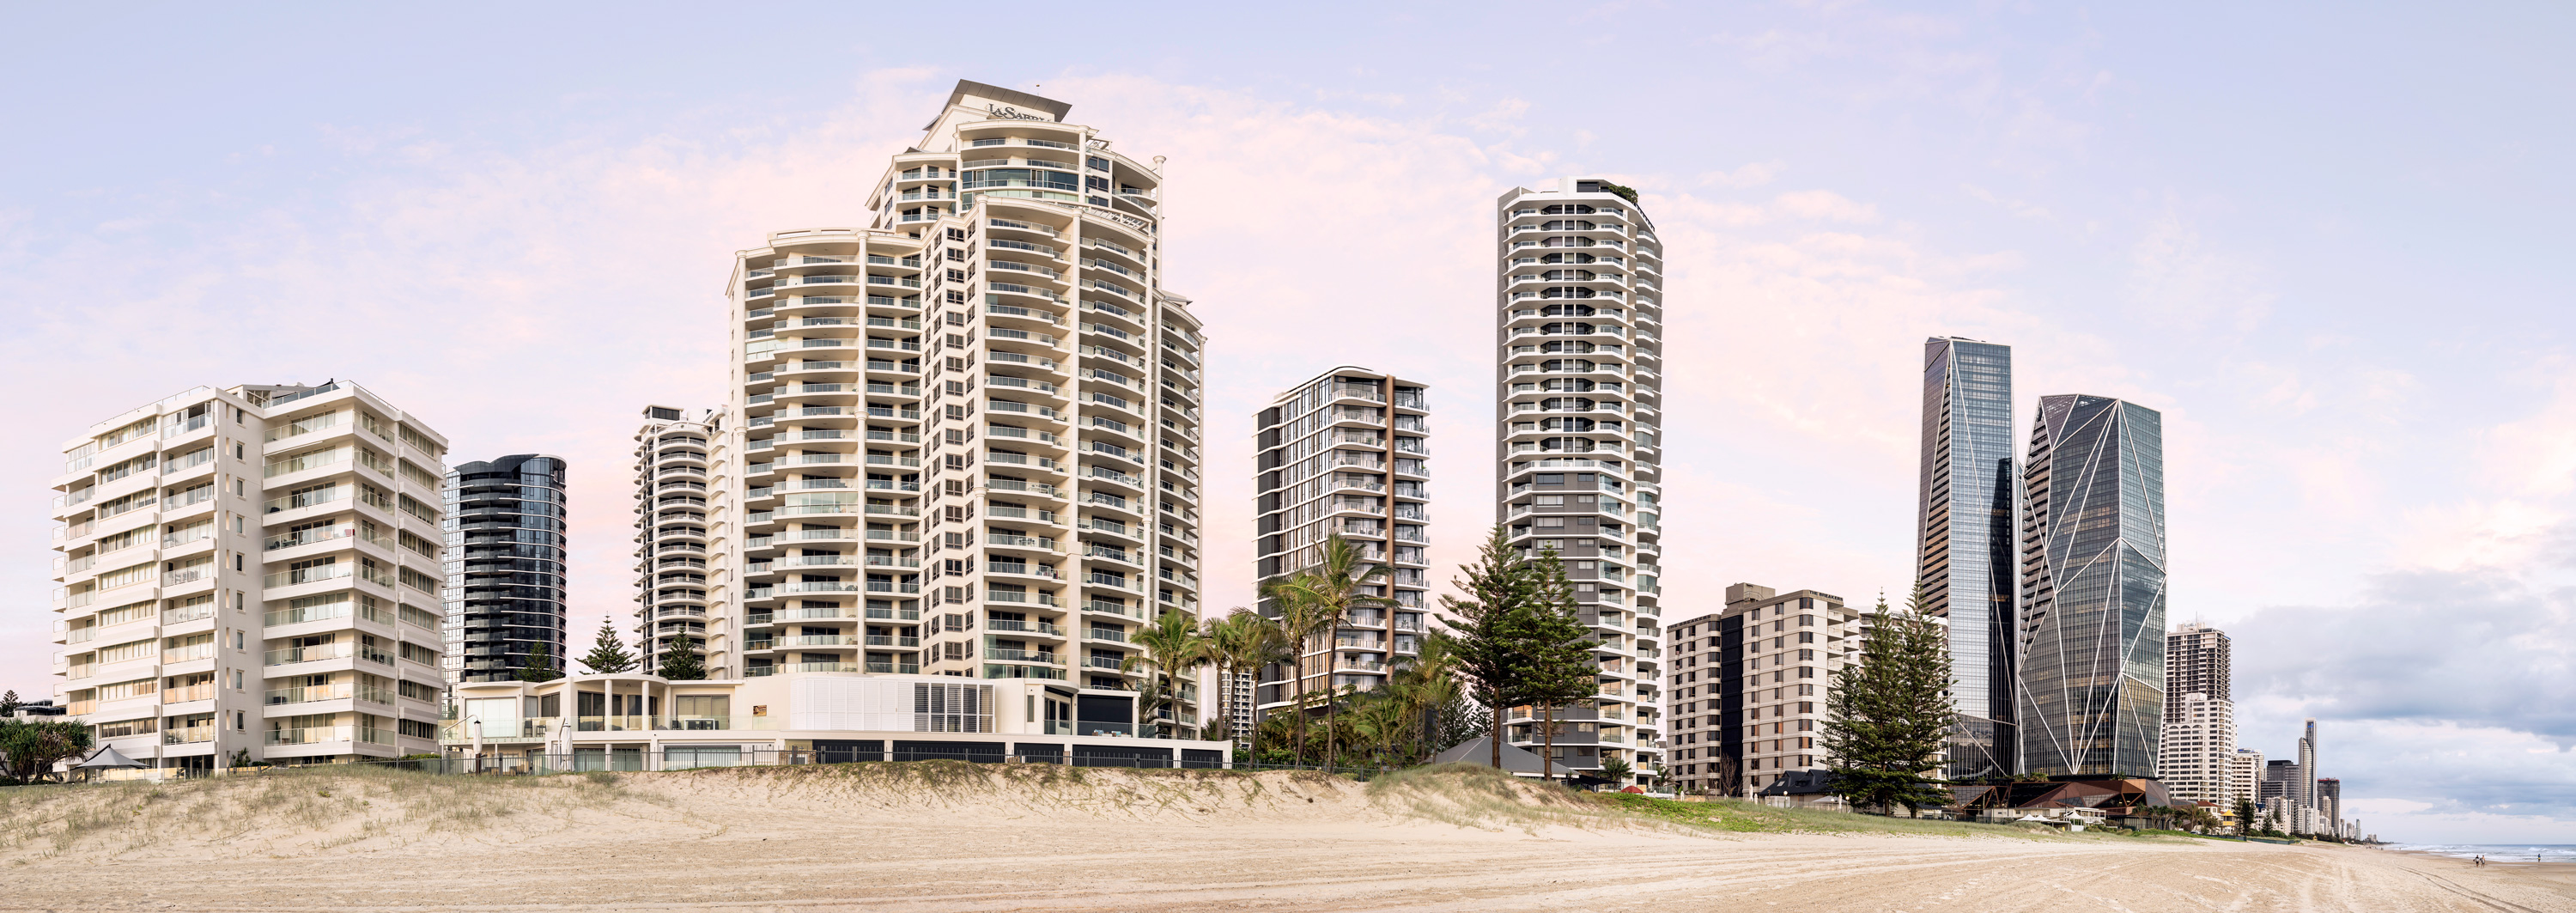 Shoreline - BDA Architecture - Gold Coast, Queensland